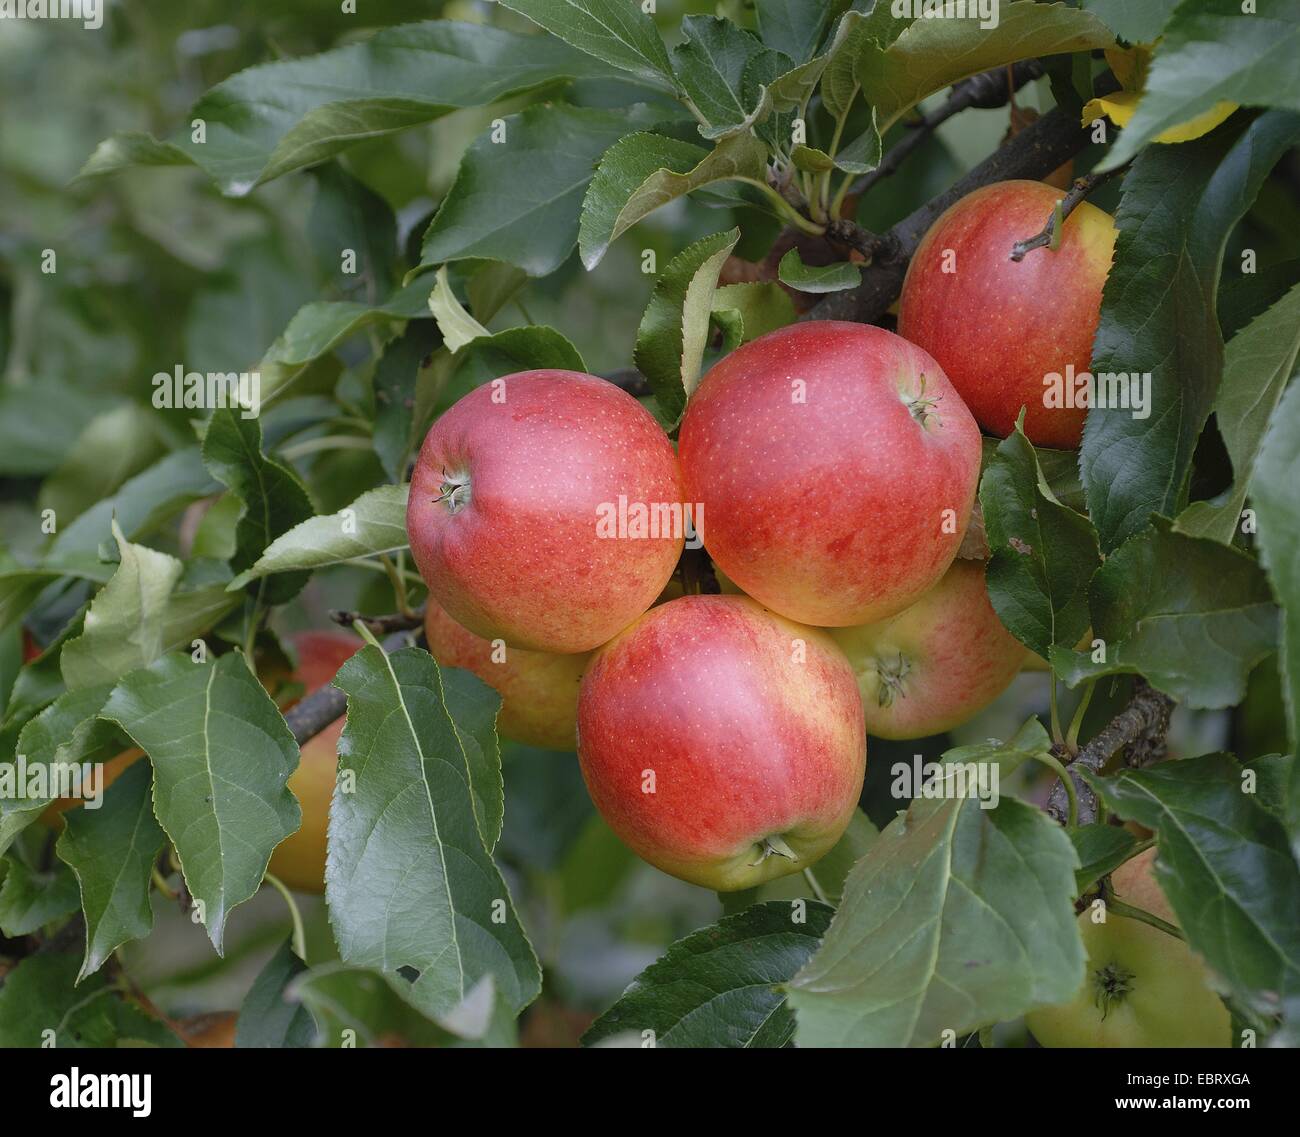 apple tree (Malus domestica 'Gala', Malus domestica Gala), cultivar Gala, apples on a tree Stock Photo